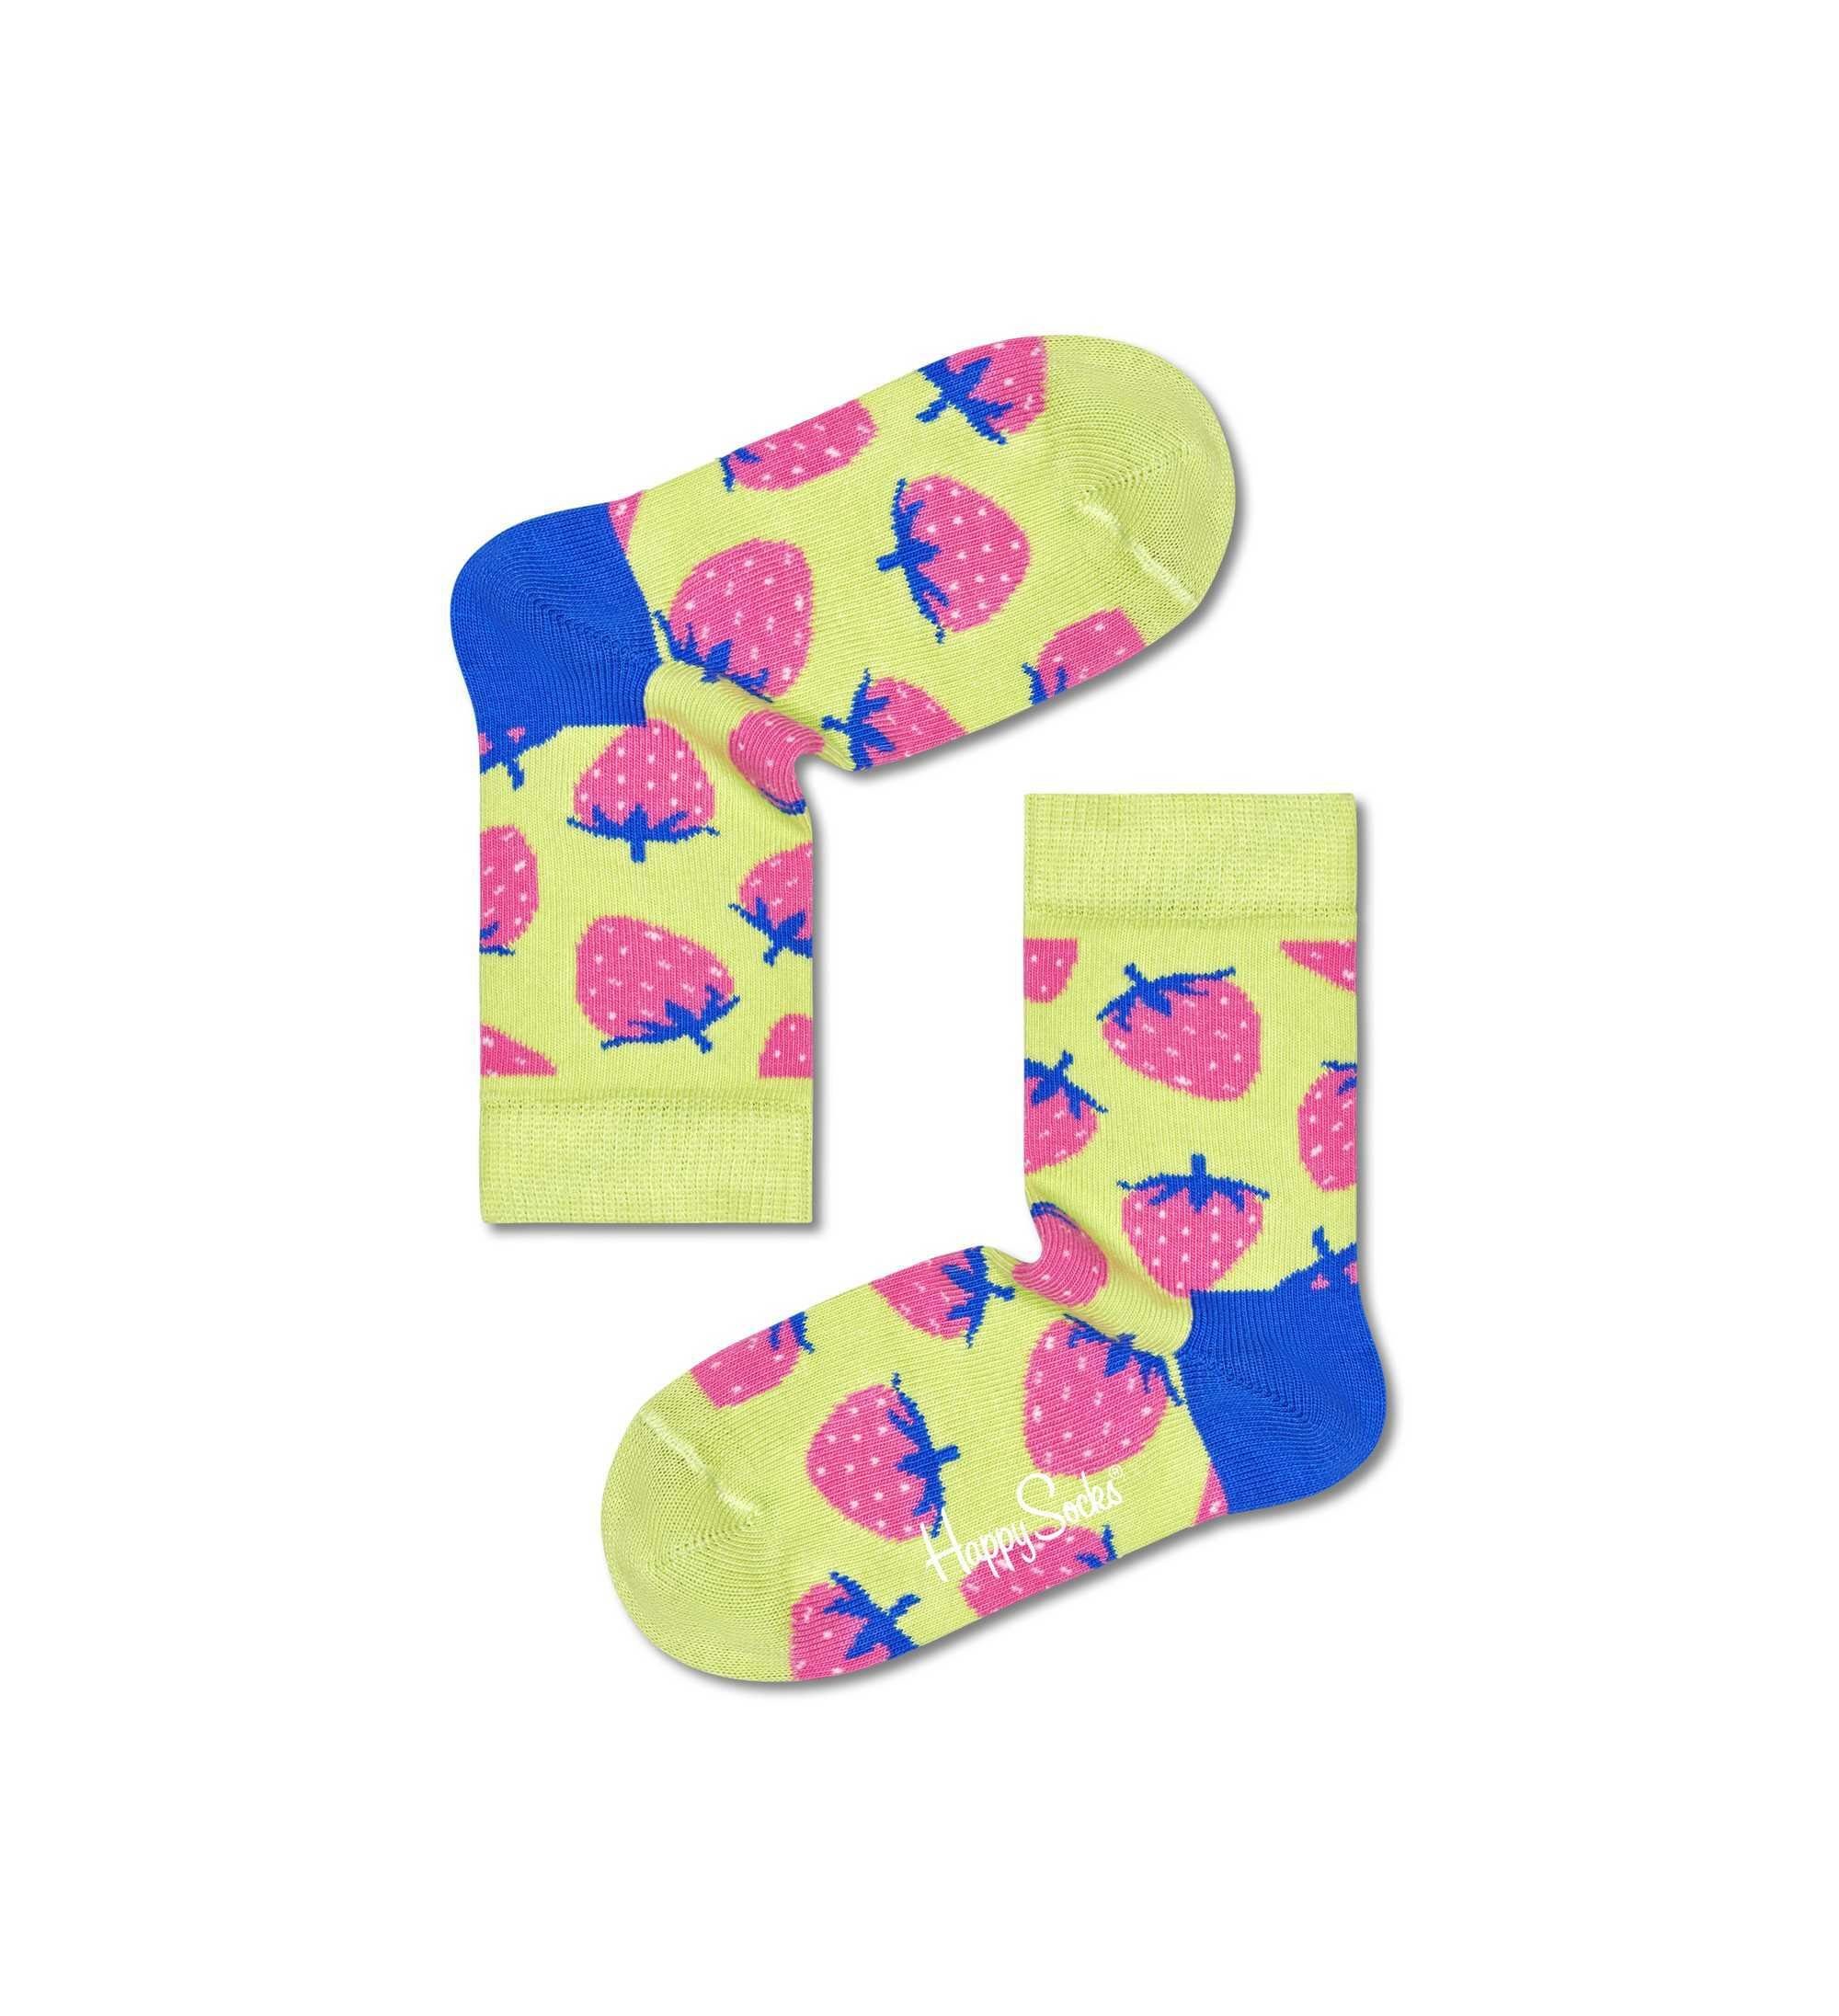 Socken Kinder Summertime - Freizeitsocken Geschenkbox 4er Pack unisex, Happy Socks